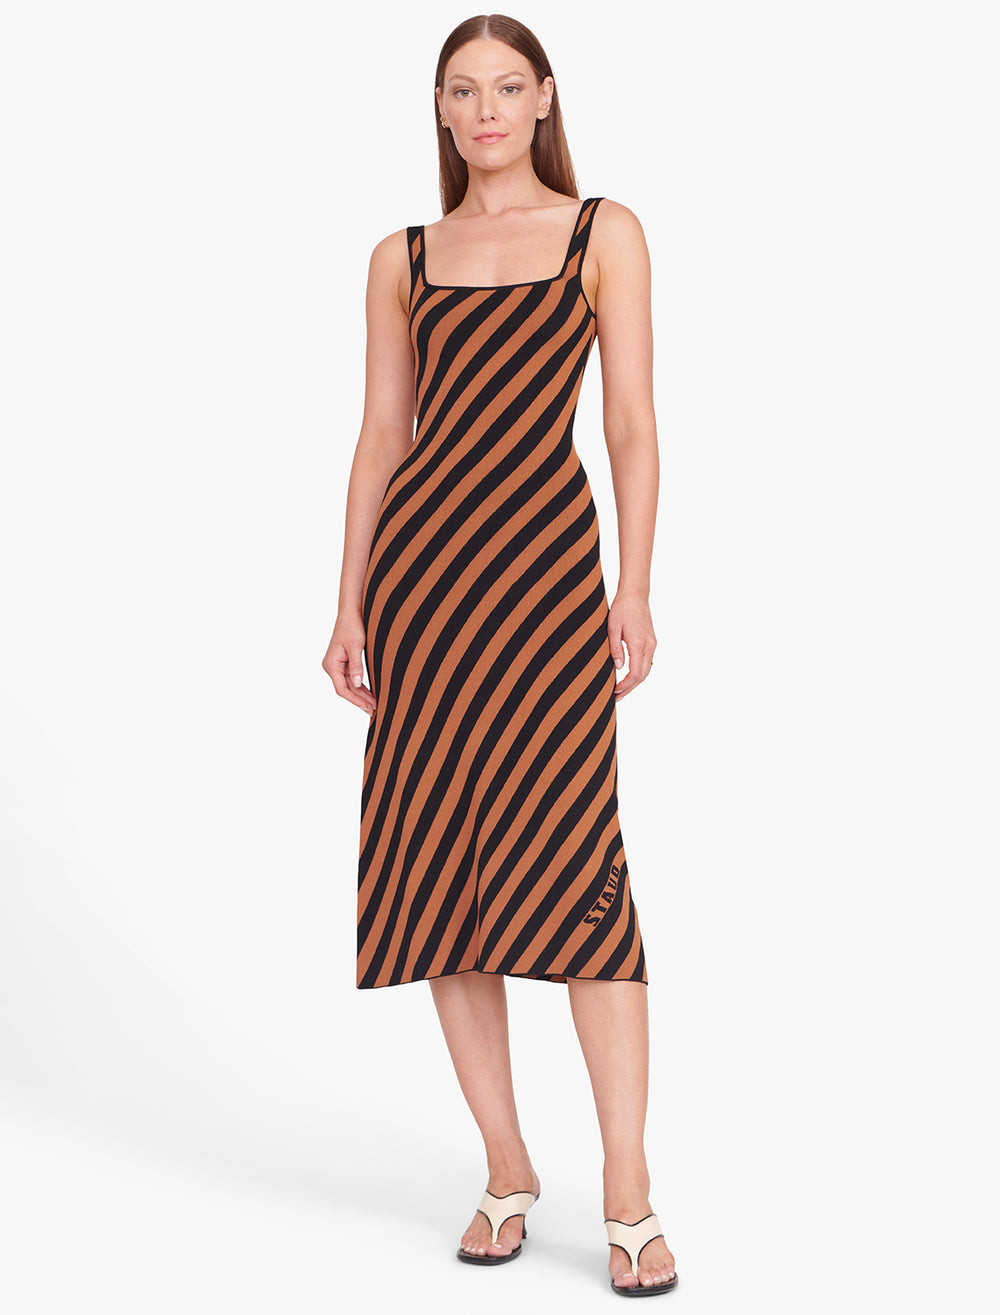 Model wearing STAUD's Kate Dress in Black and Tan Seashore Stripe.